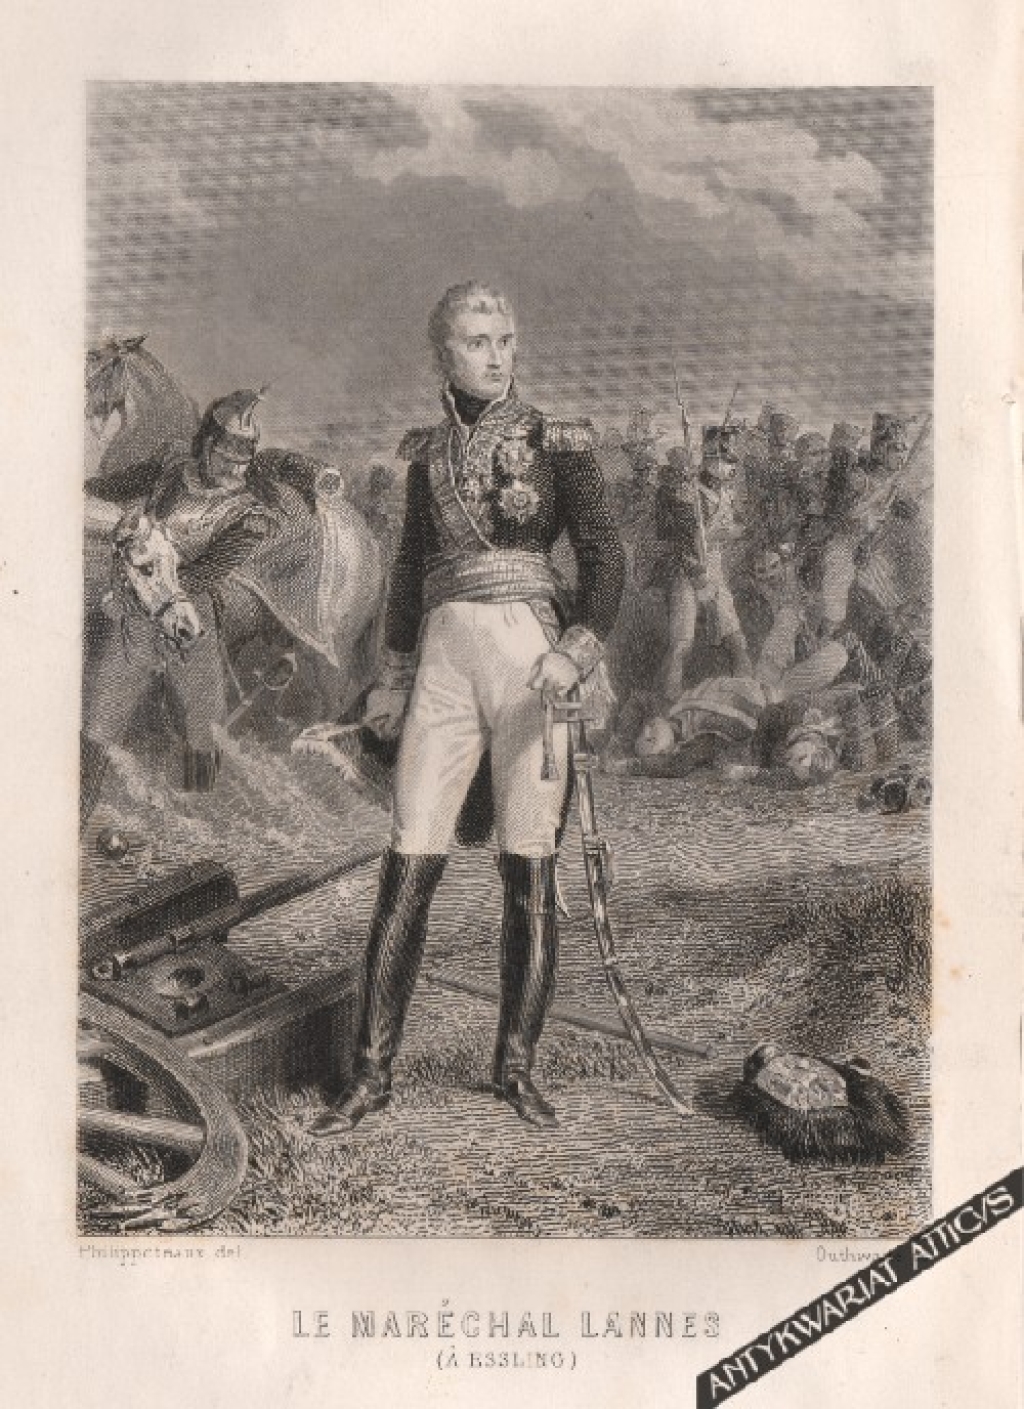 [rycina, ok. 1840] Le marechal Lannes (A Essling) [marszałek Jean Lannes]